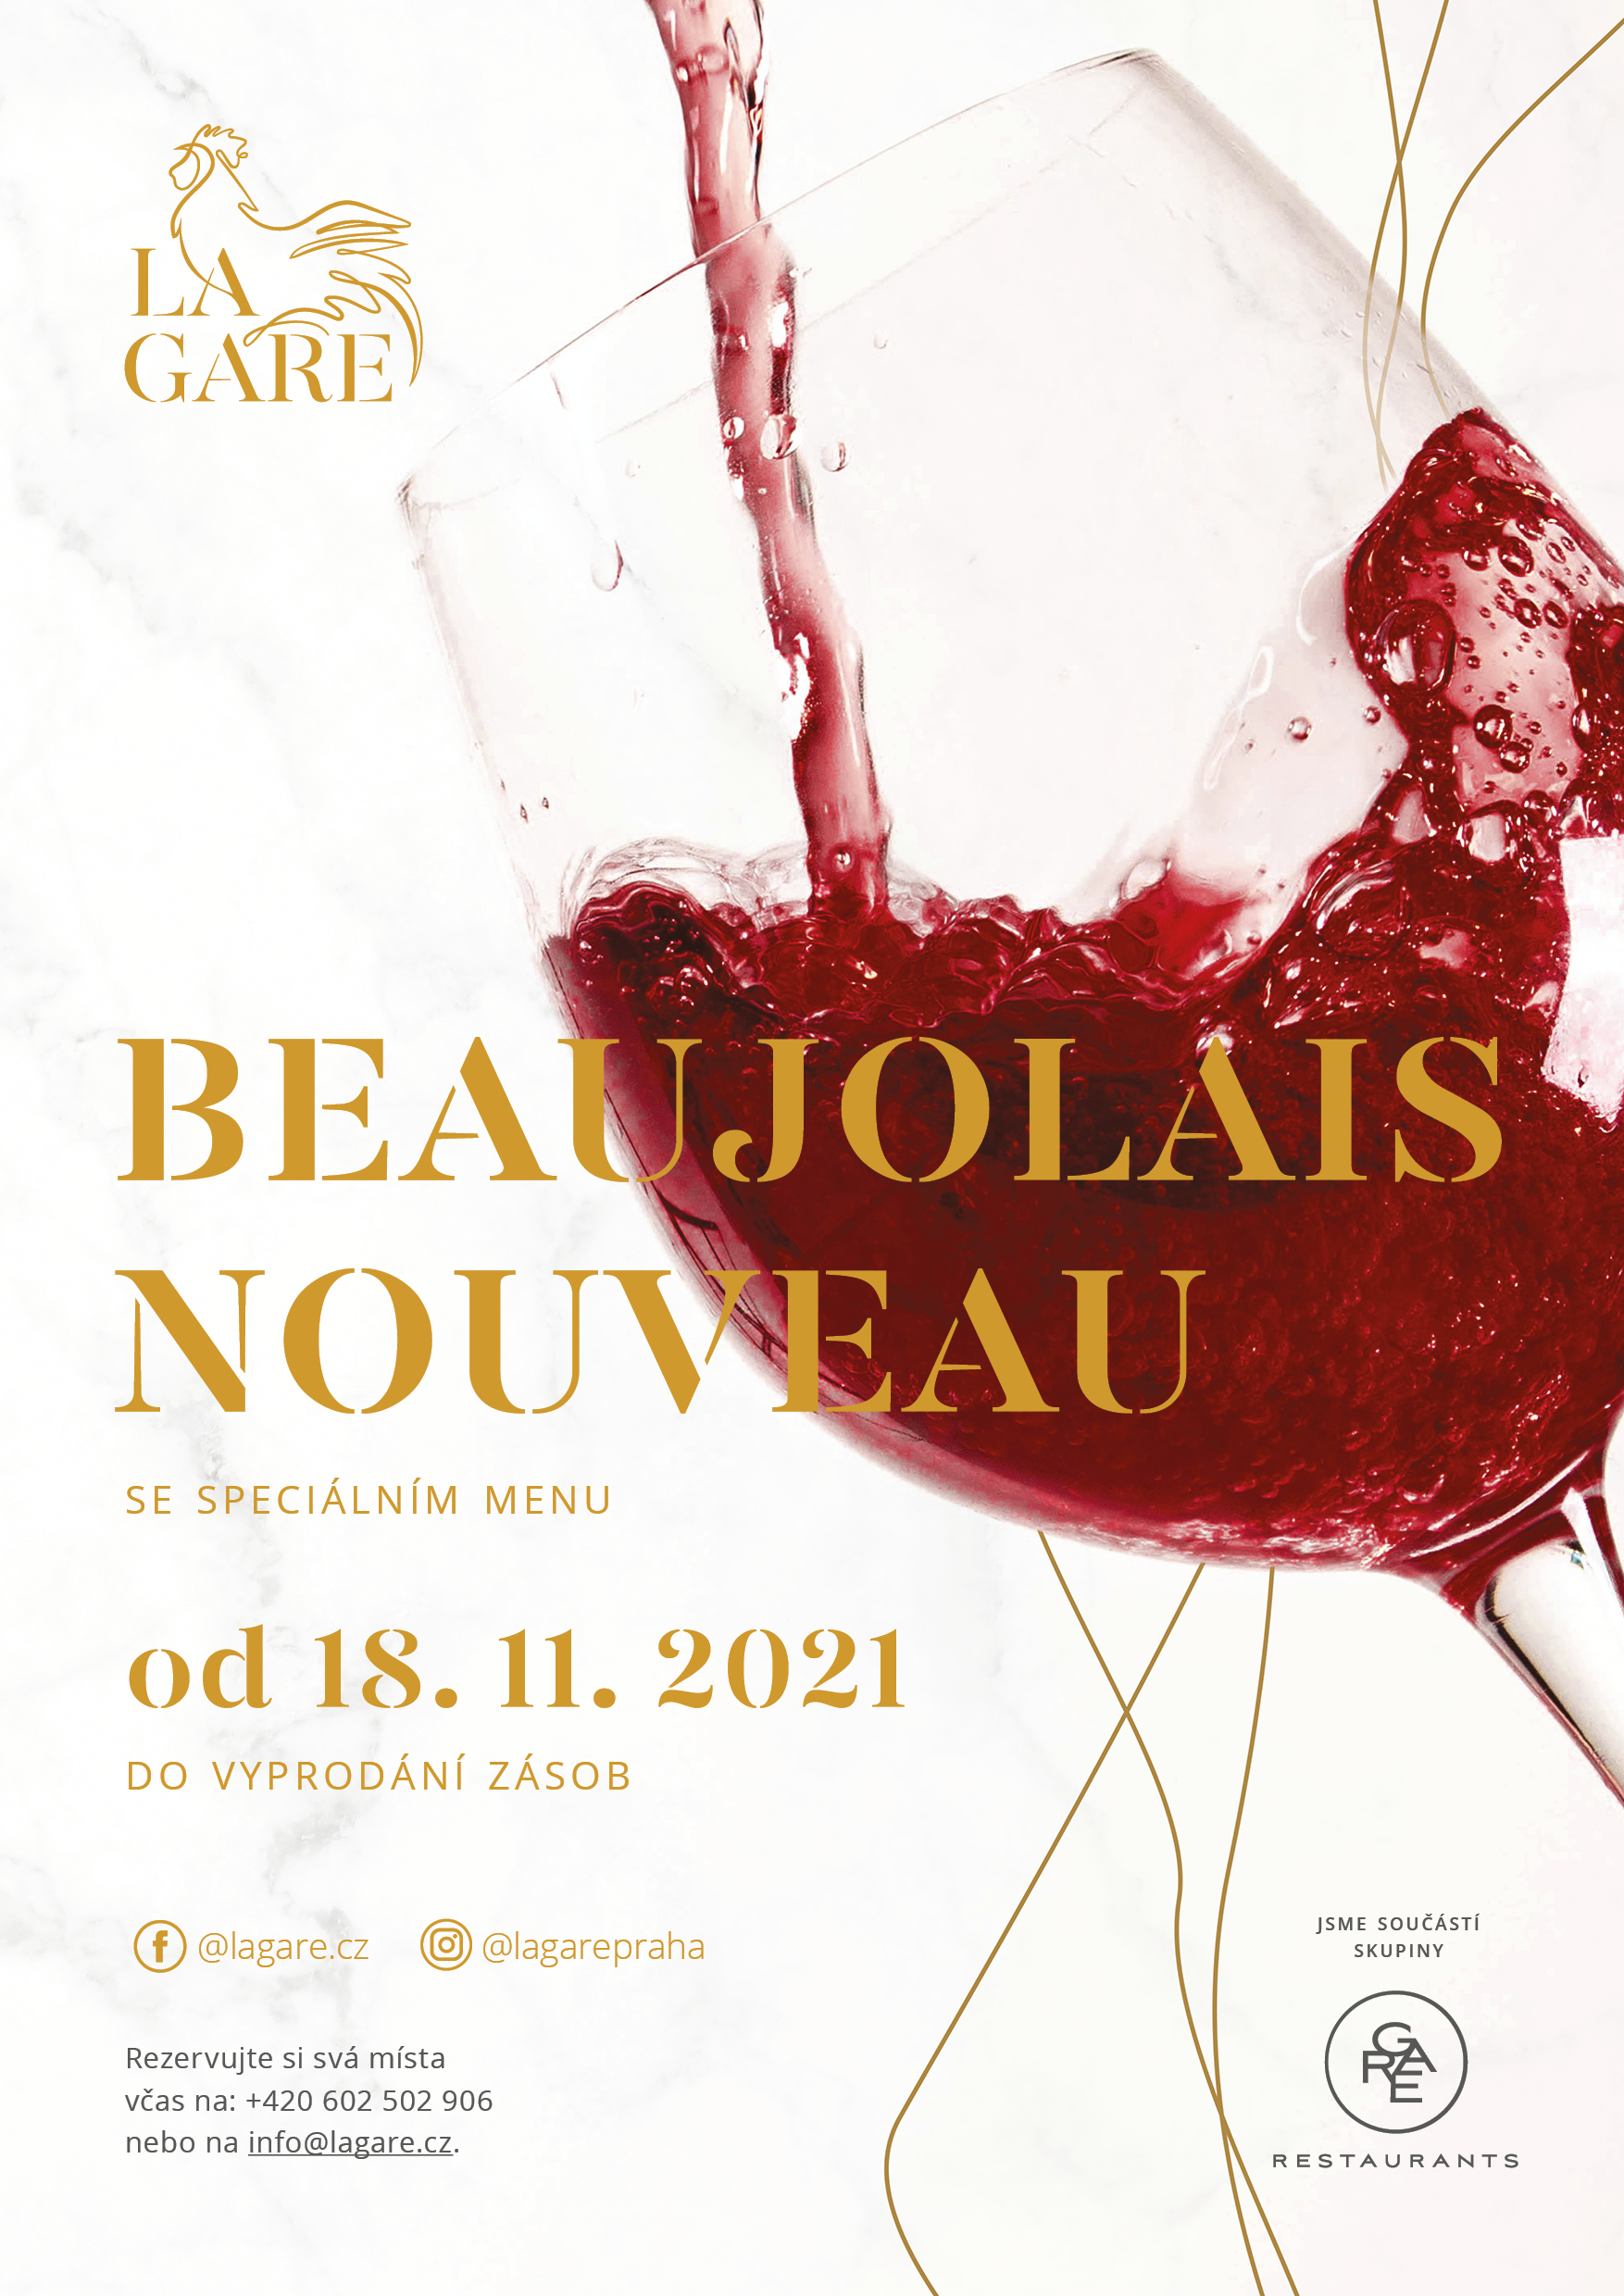 Beaujolais nouveau se speciálním menu